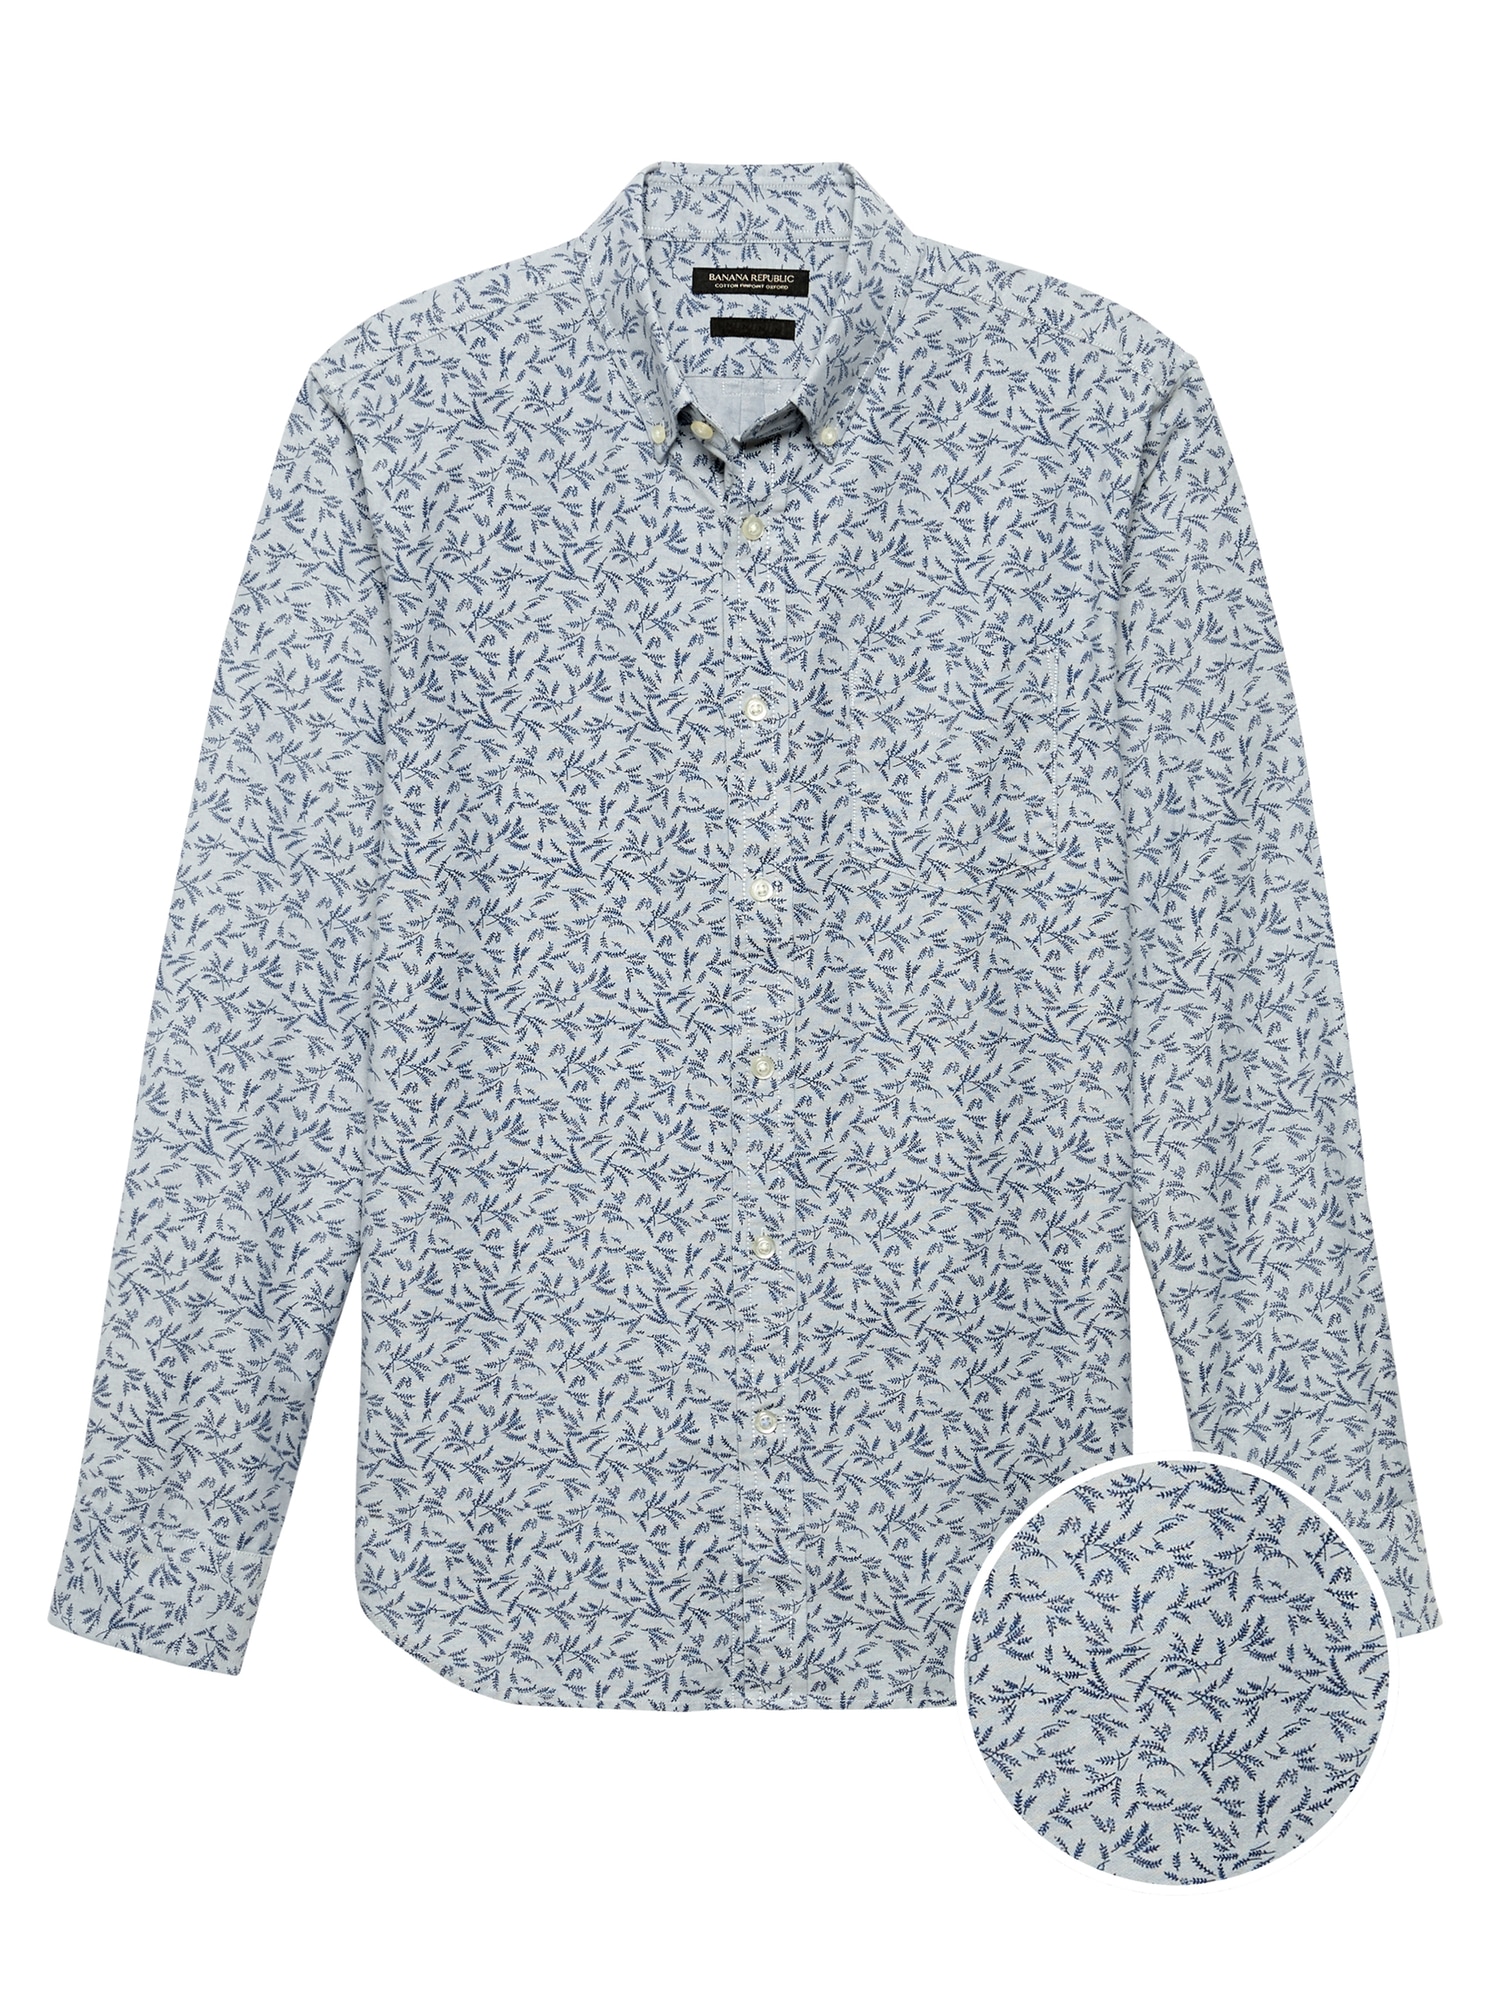 Standard-Fit Cotton Oxford Shirt